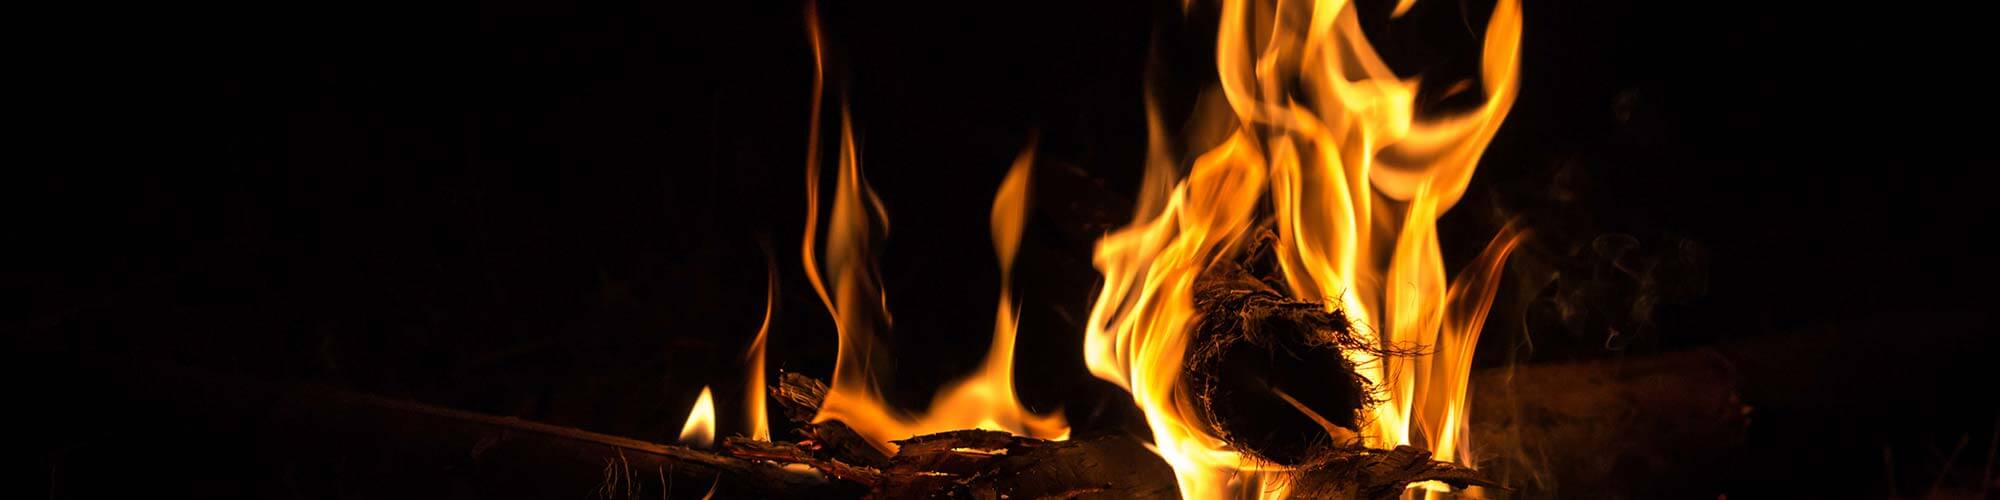 Fire burning log